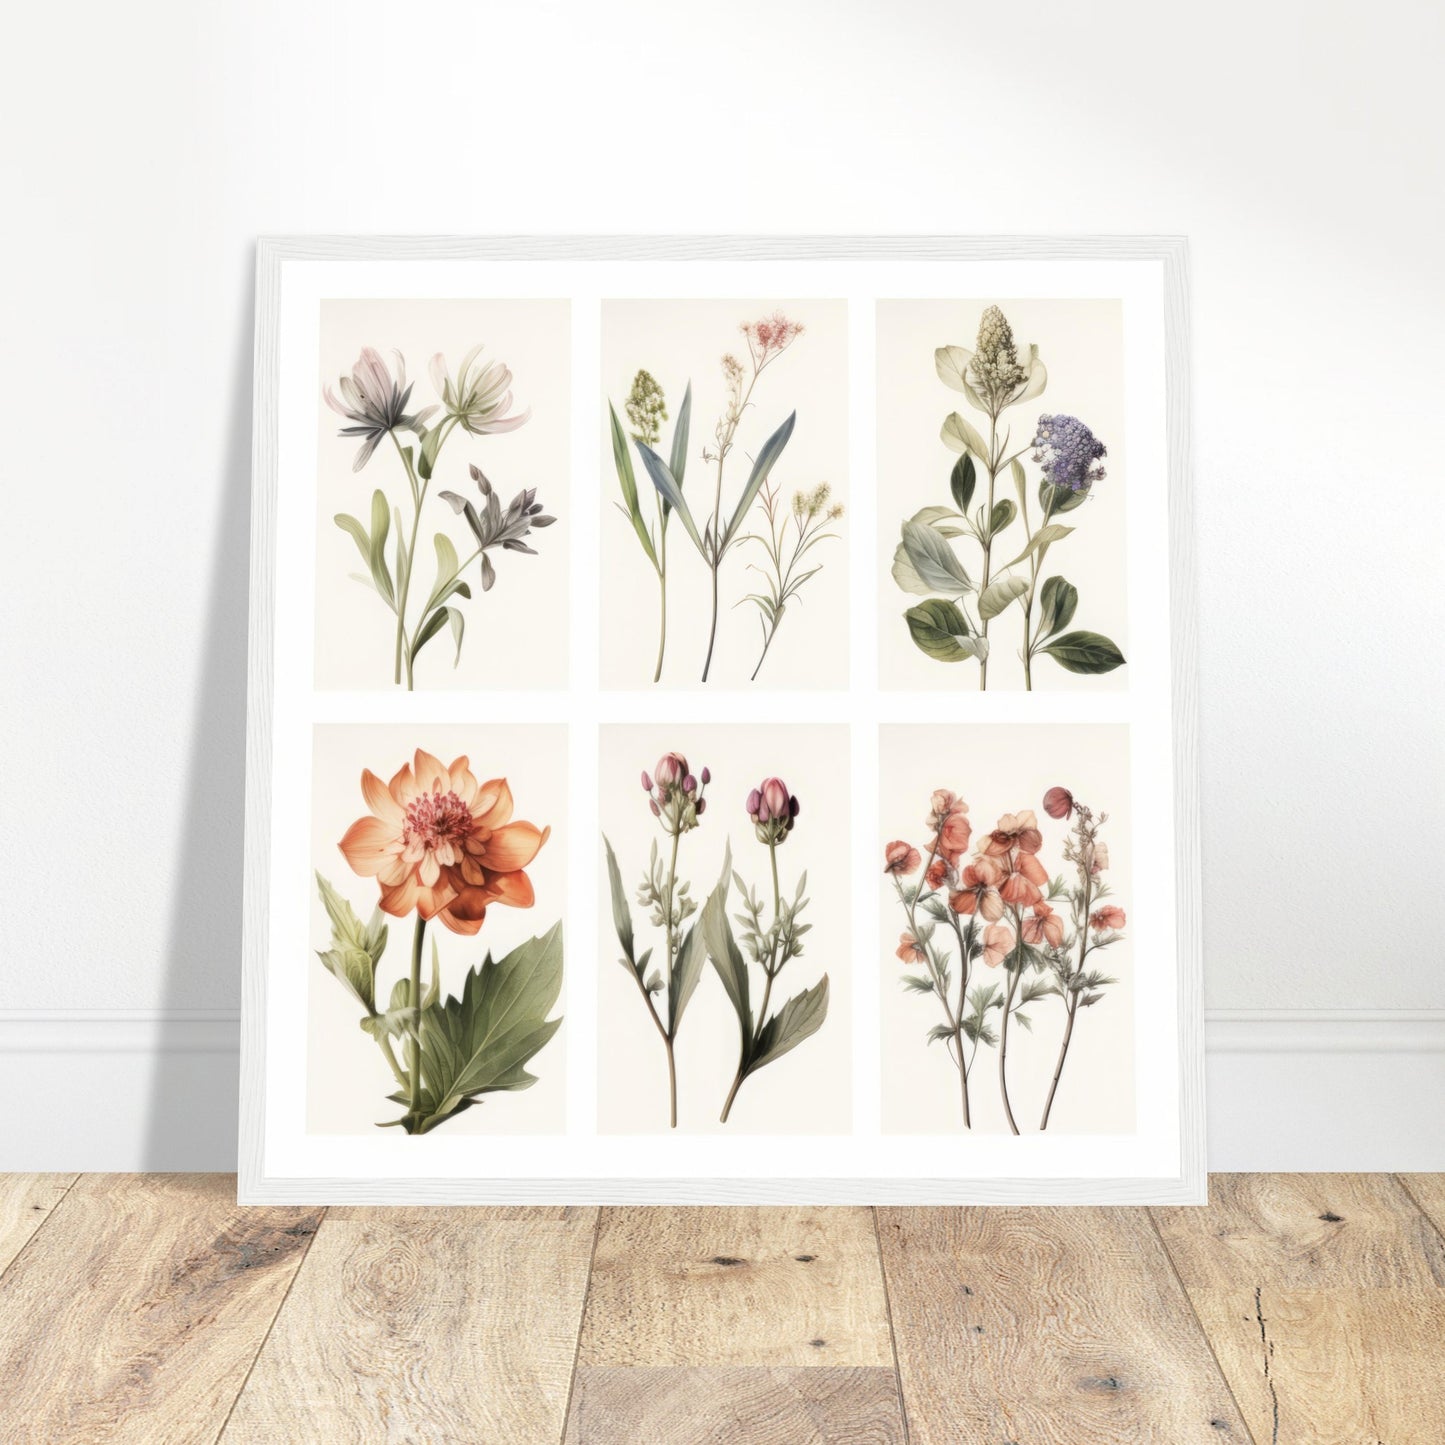 Elegance - Botanical Artwork #3- Print Room Ltd Dark wood frame 50x50 cm / 20x20"